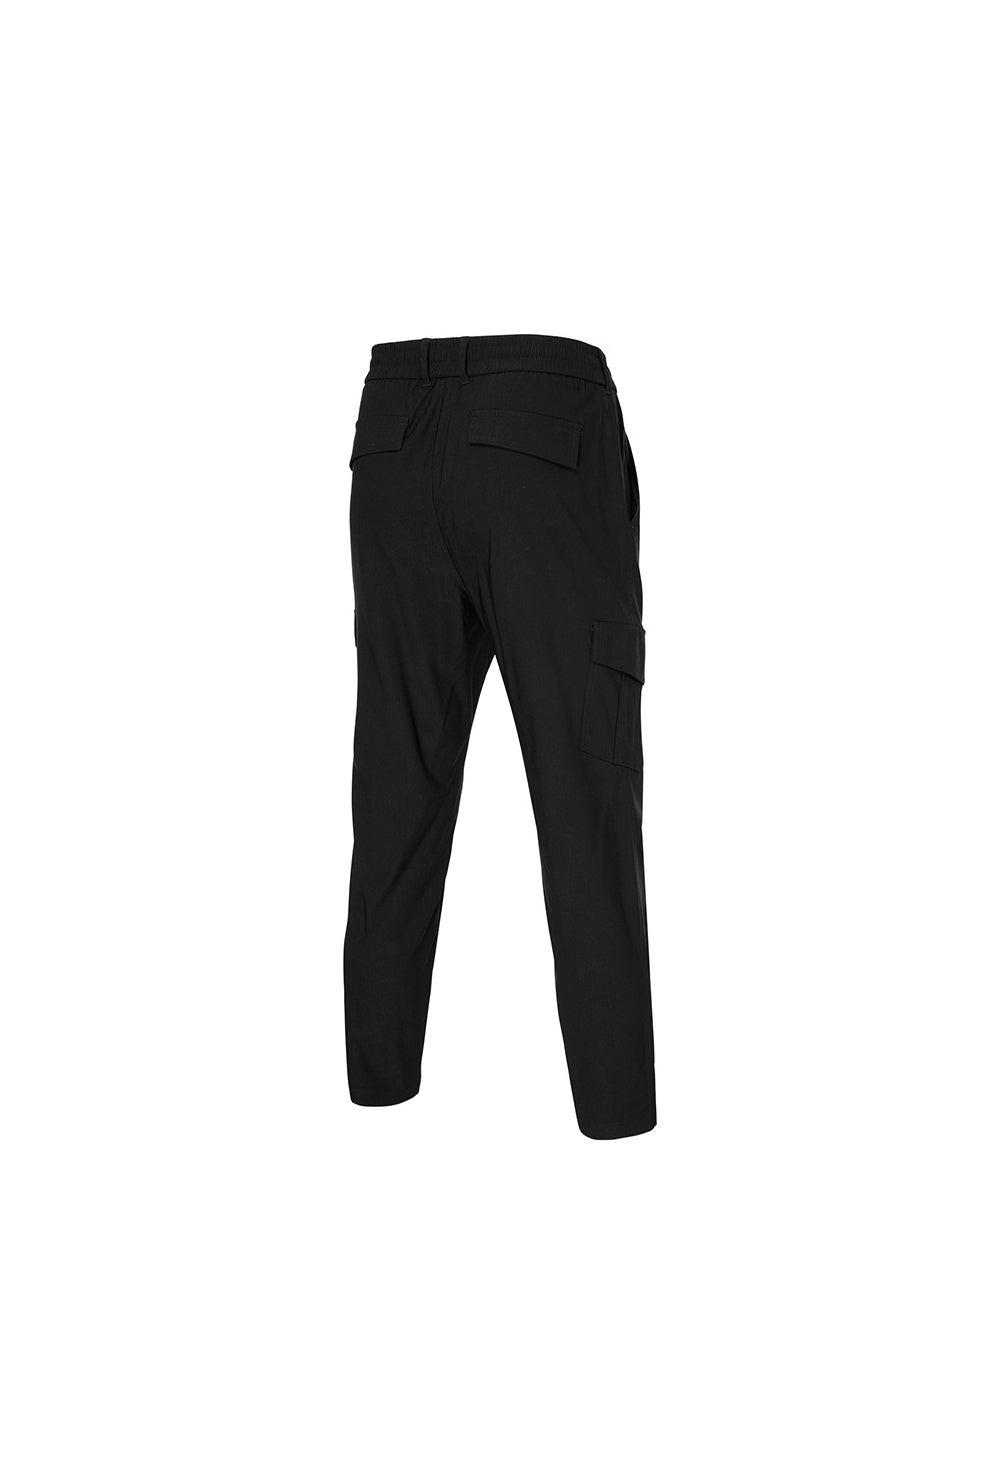 Stretch Out Pocket Pants - Black